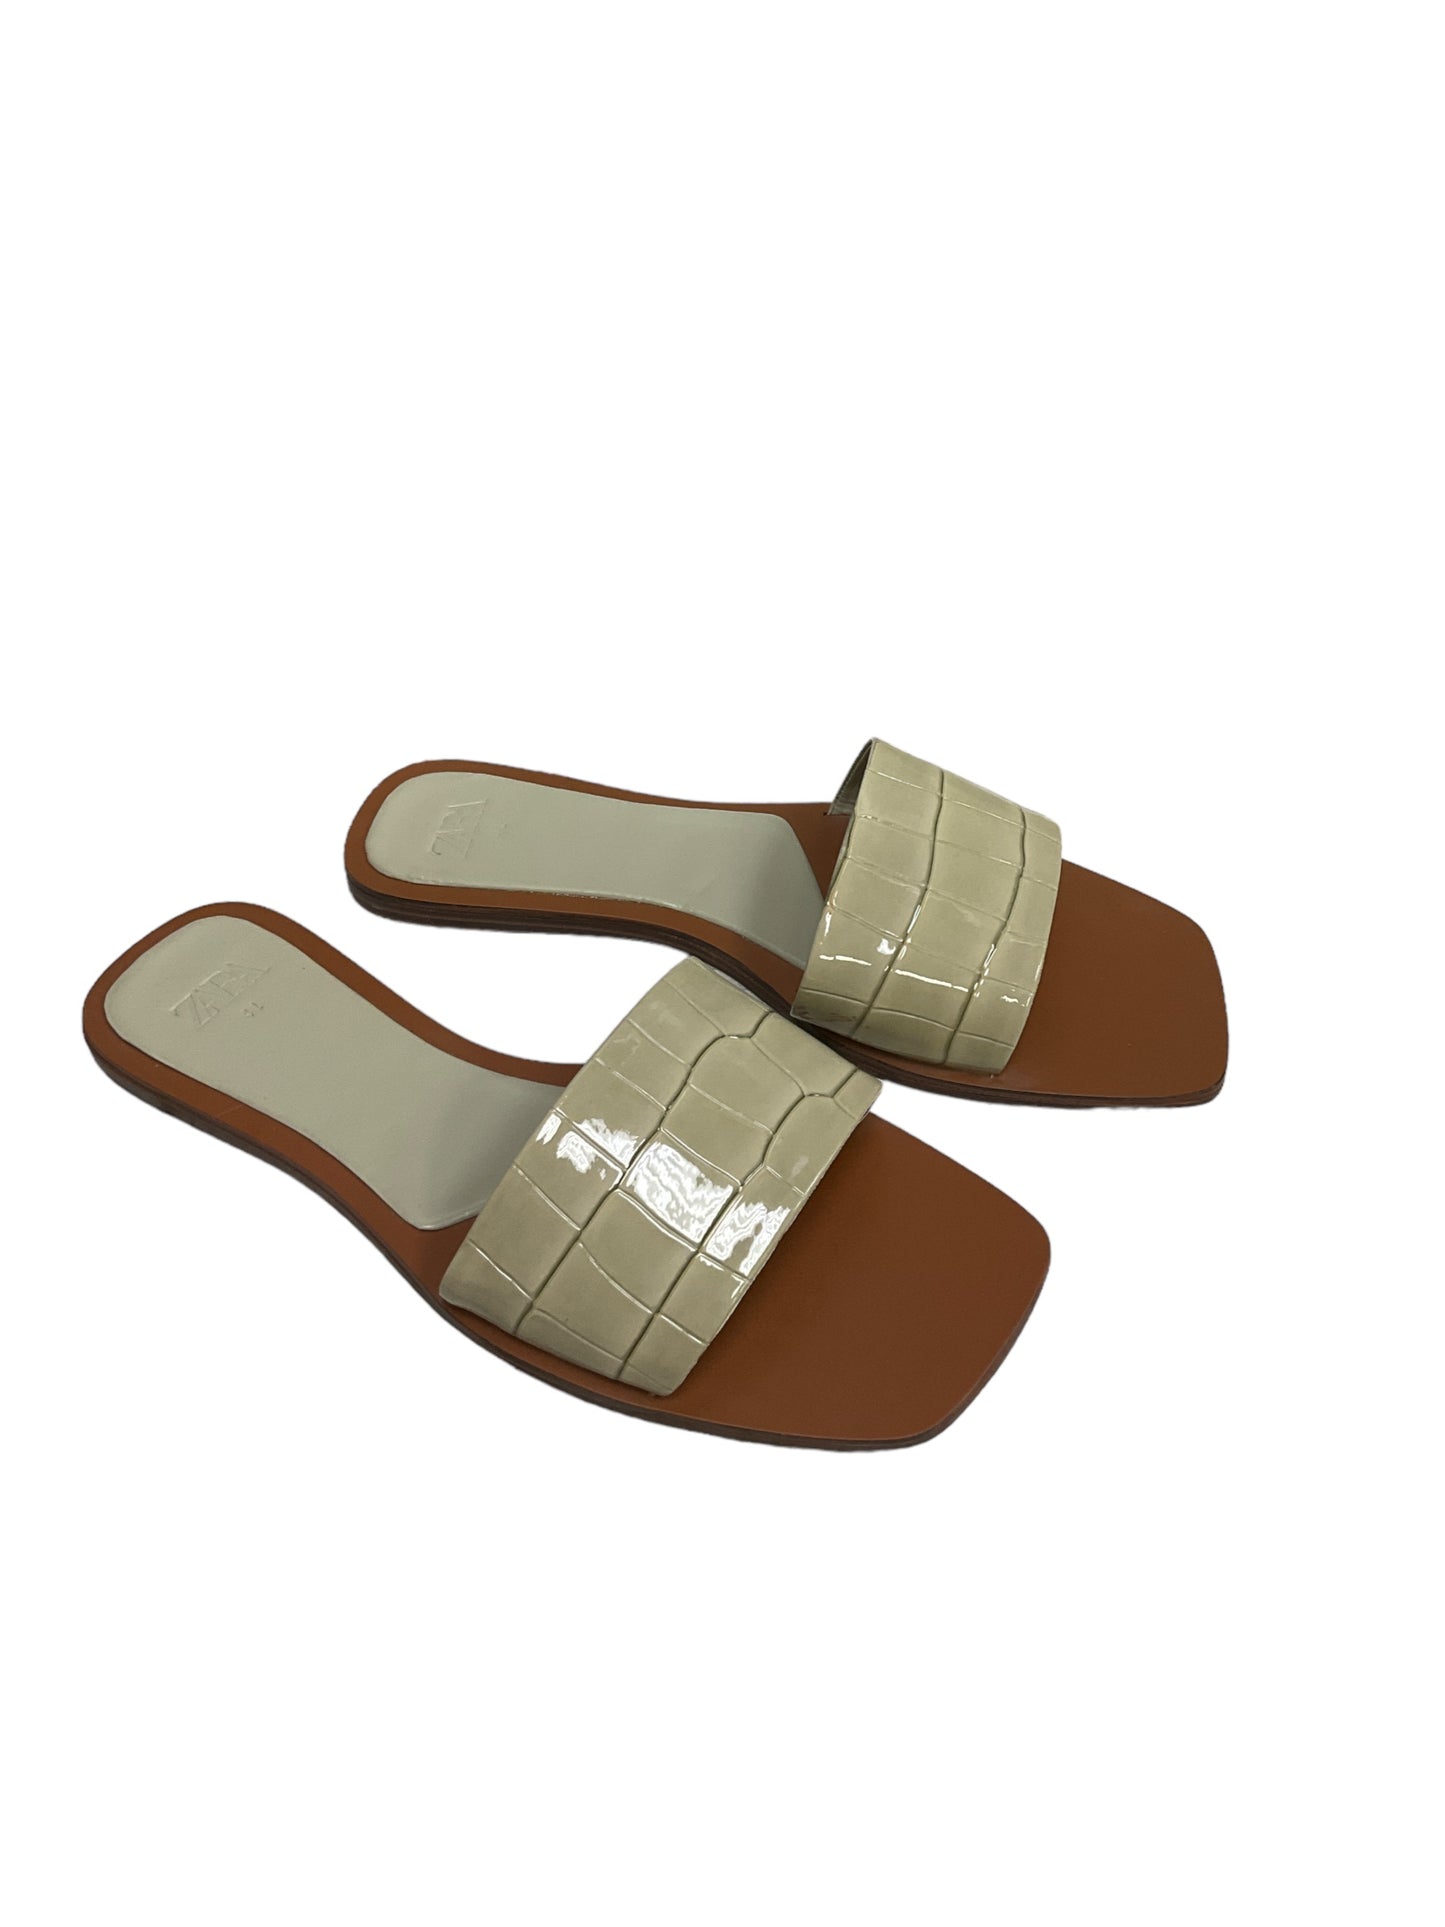 Sandals Flats By Zara  Size: 9.5